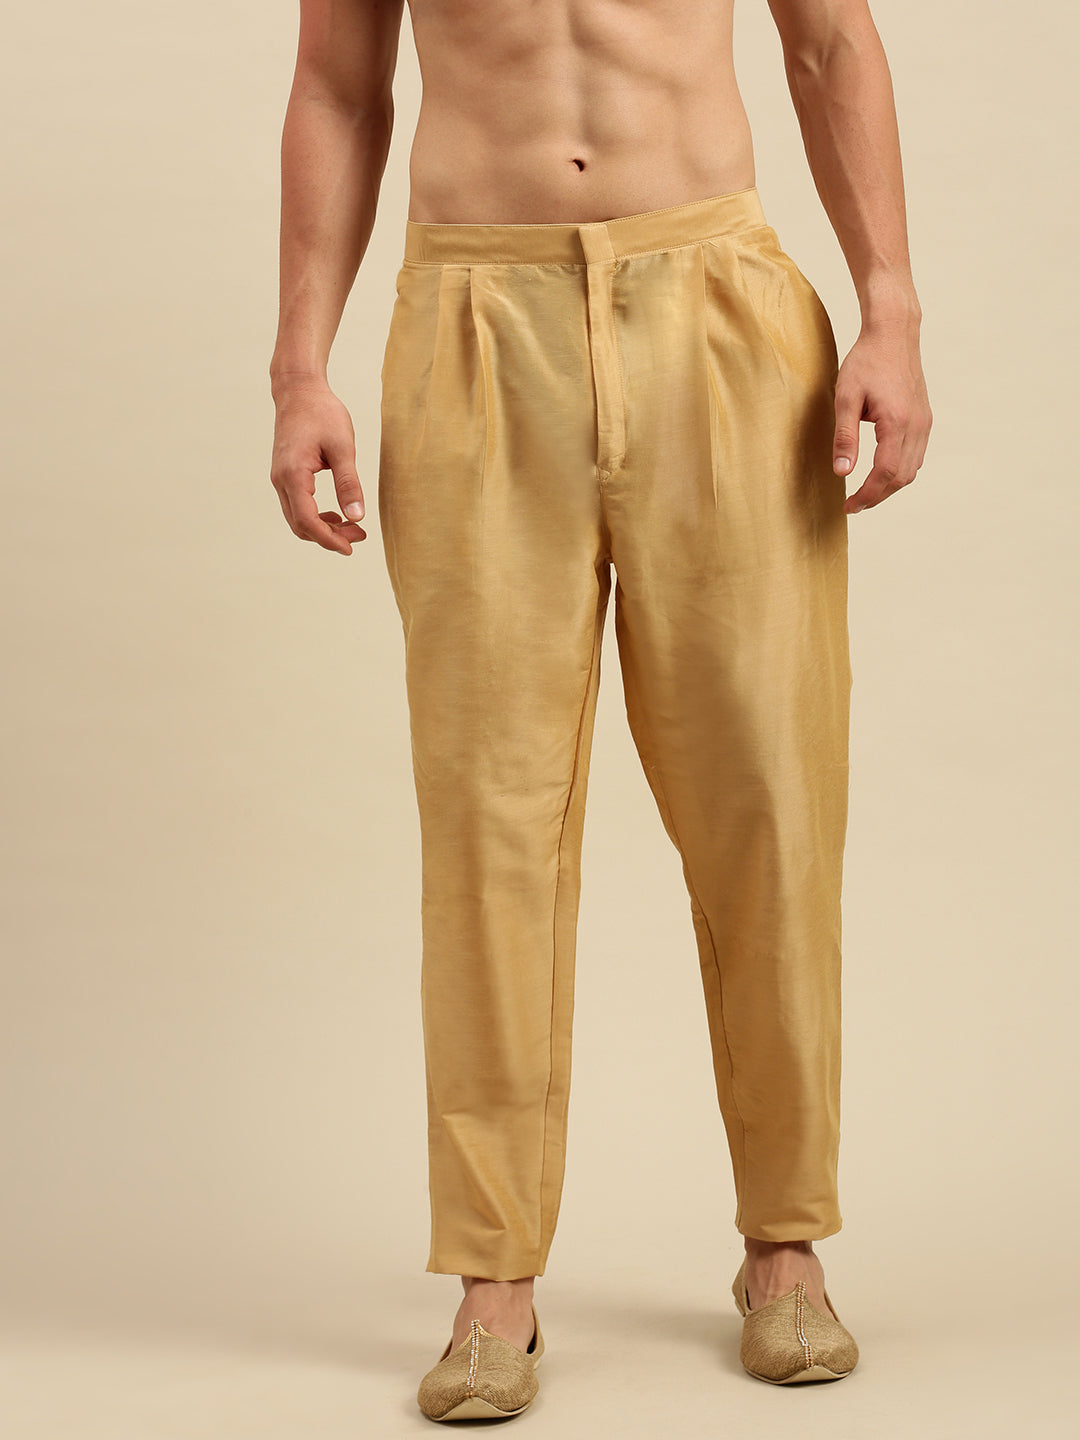 Tommy Bahama Men's 36x32 Relax Beige Color 100% Silk Cuffed Pants Trousers  | eBay